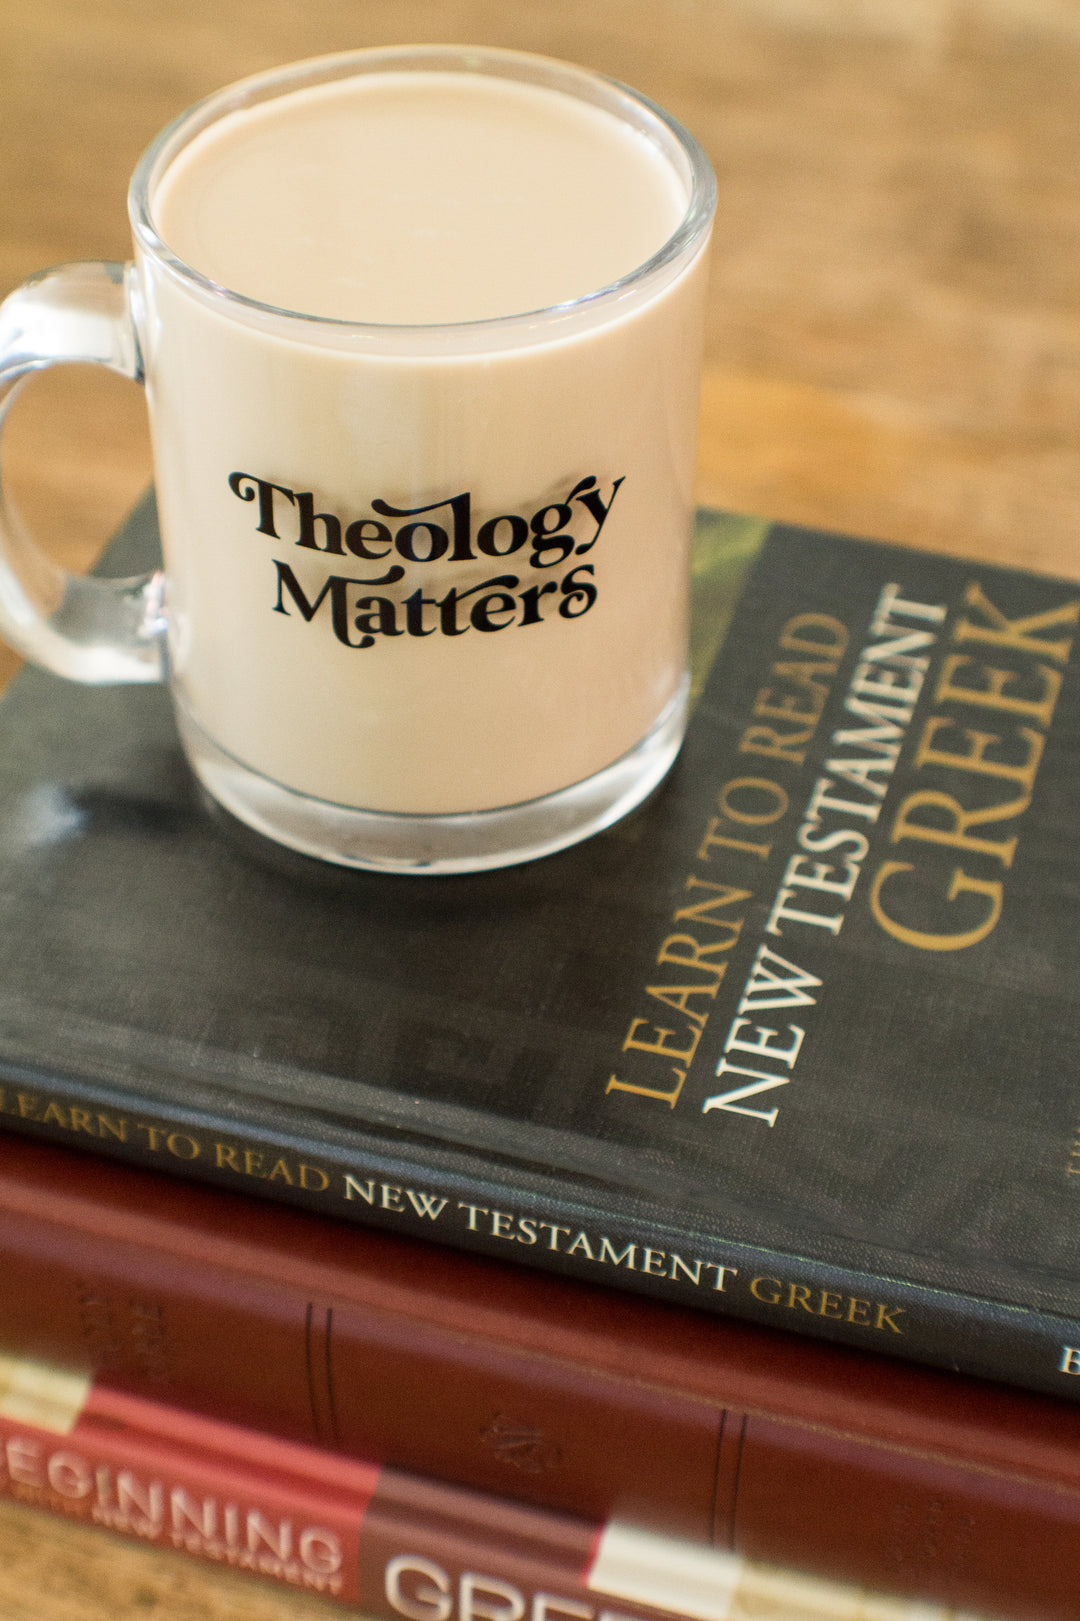 Groovy "Theology Matters" Clear Glass Mug